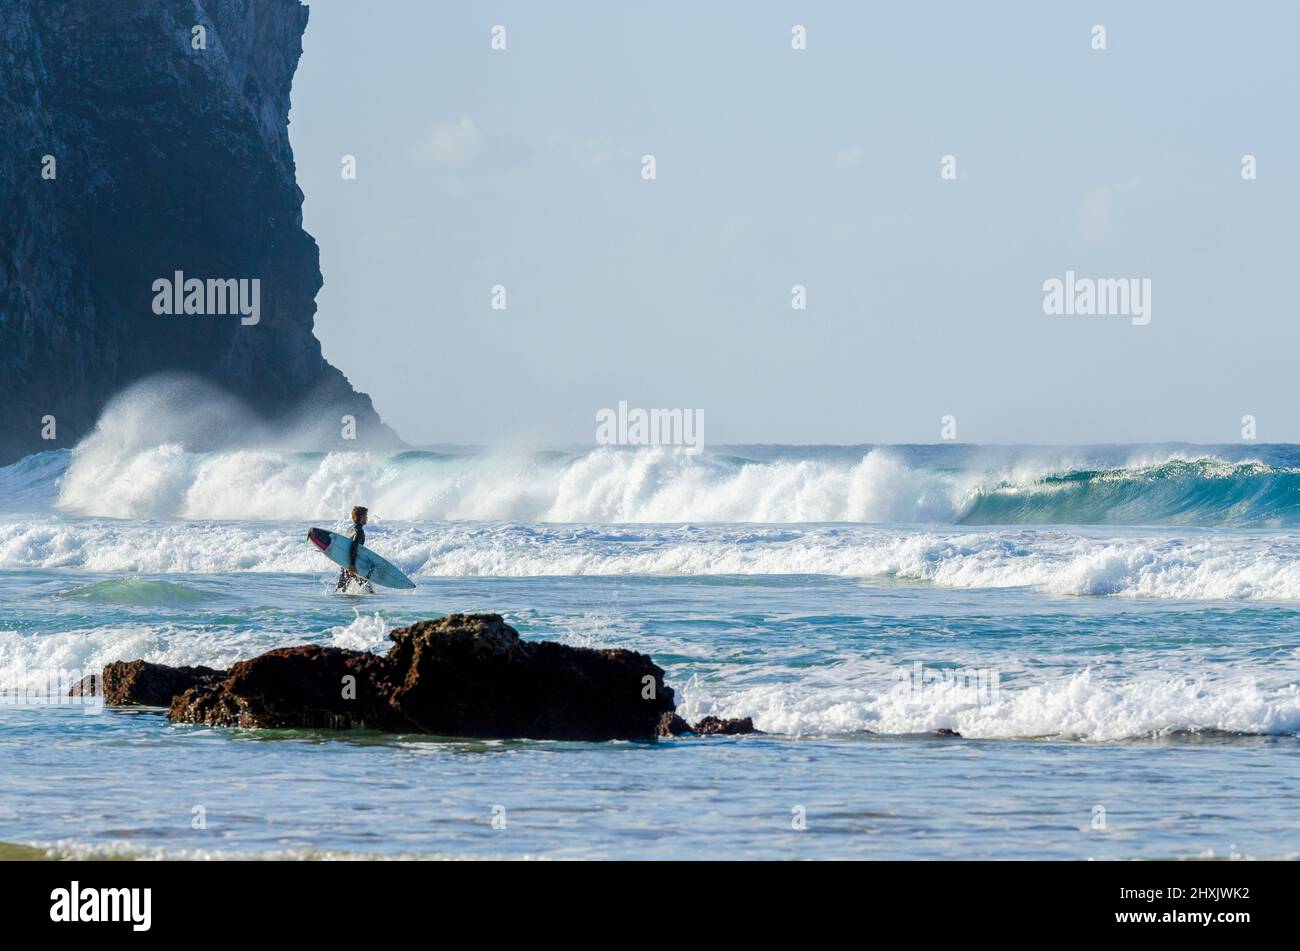 Surfer with board entering the waves at Praia de Castelejo, Vila de Bispo, Algarve, Portugal Stock Photo